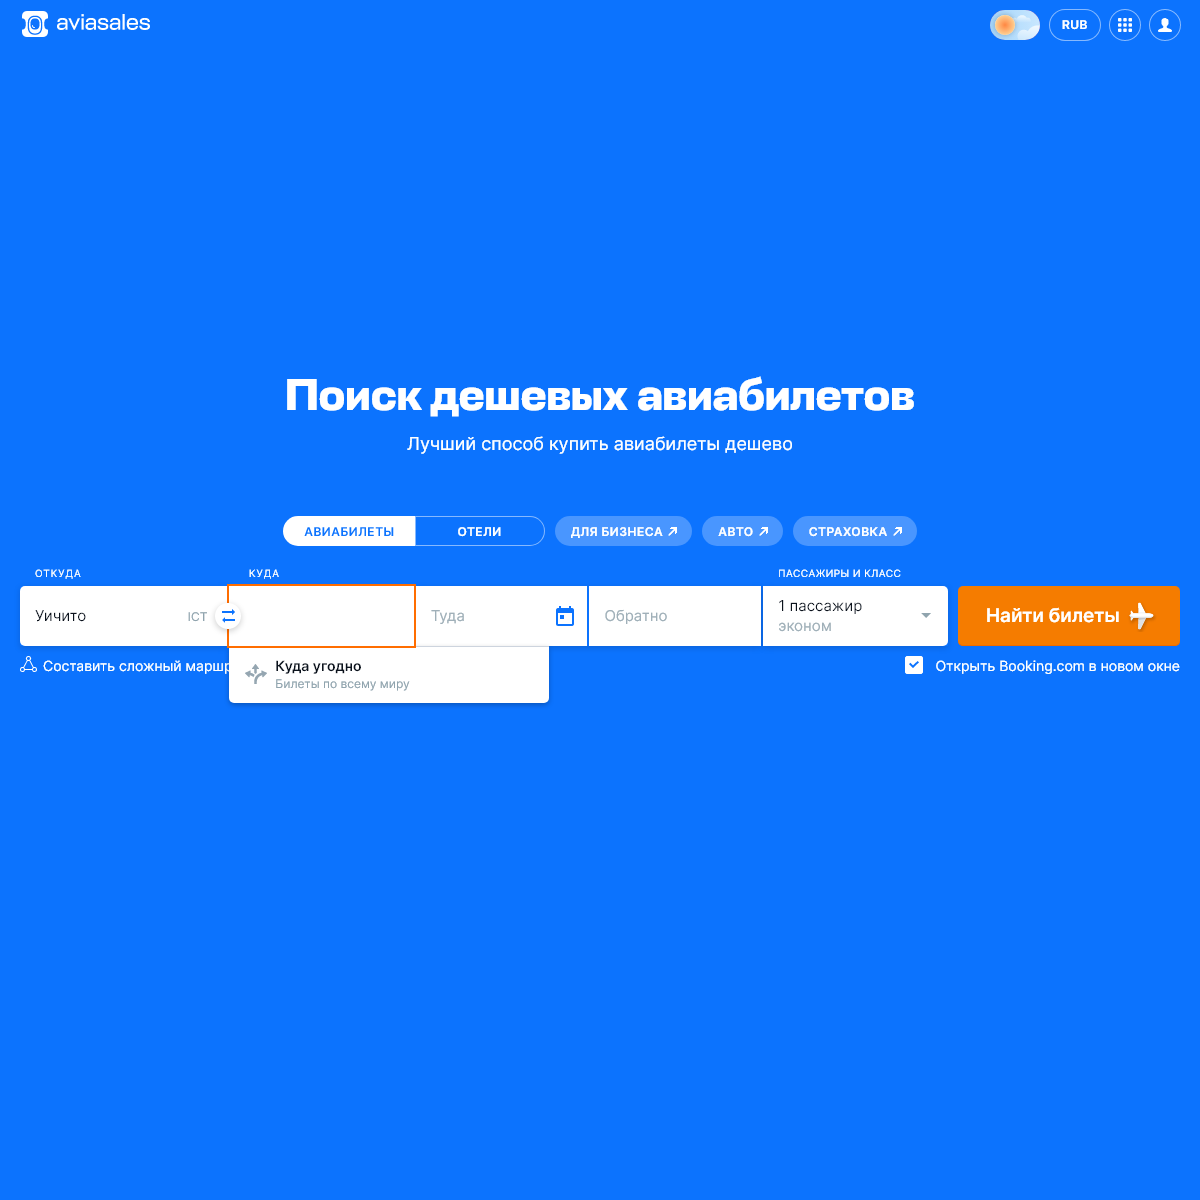 A complete backup of iapress-line.ru